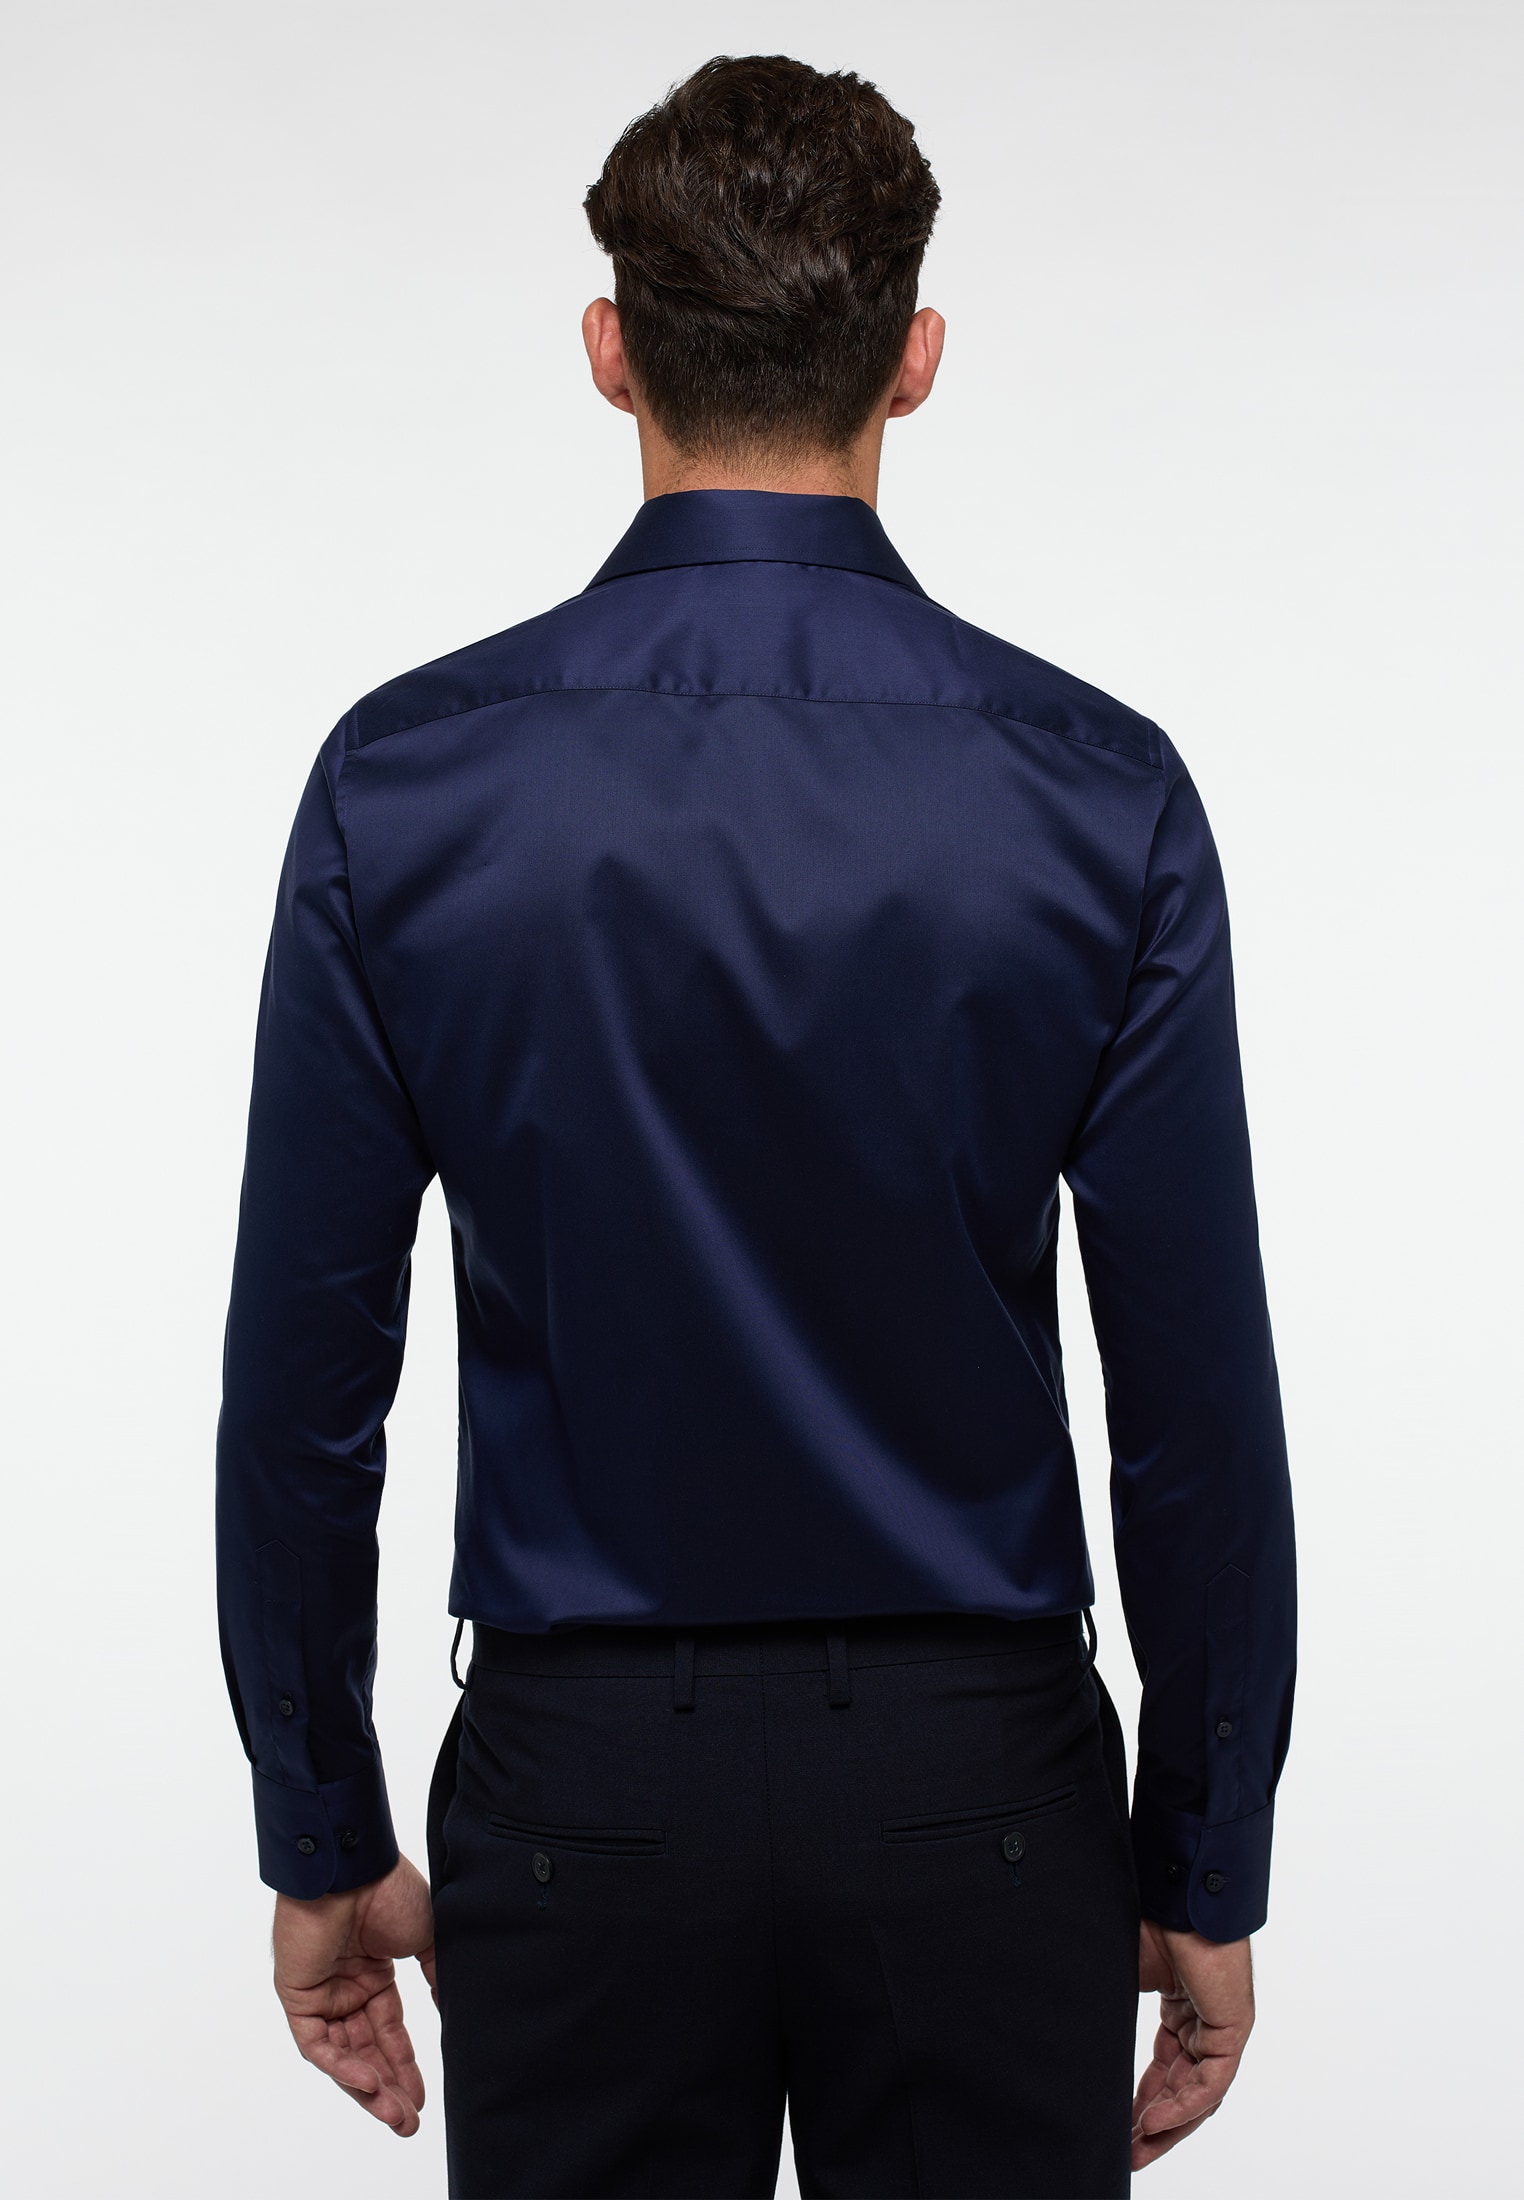 SLIM FIT Luxury Shirt Langarm in dunkelblau 1SH04299-01-81-44-1/1 | unifarben dunkelblau | | | 44